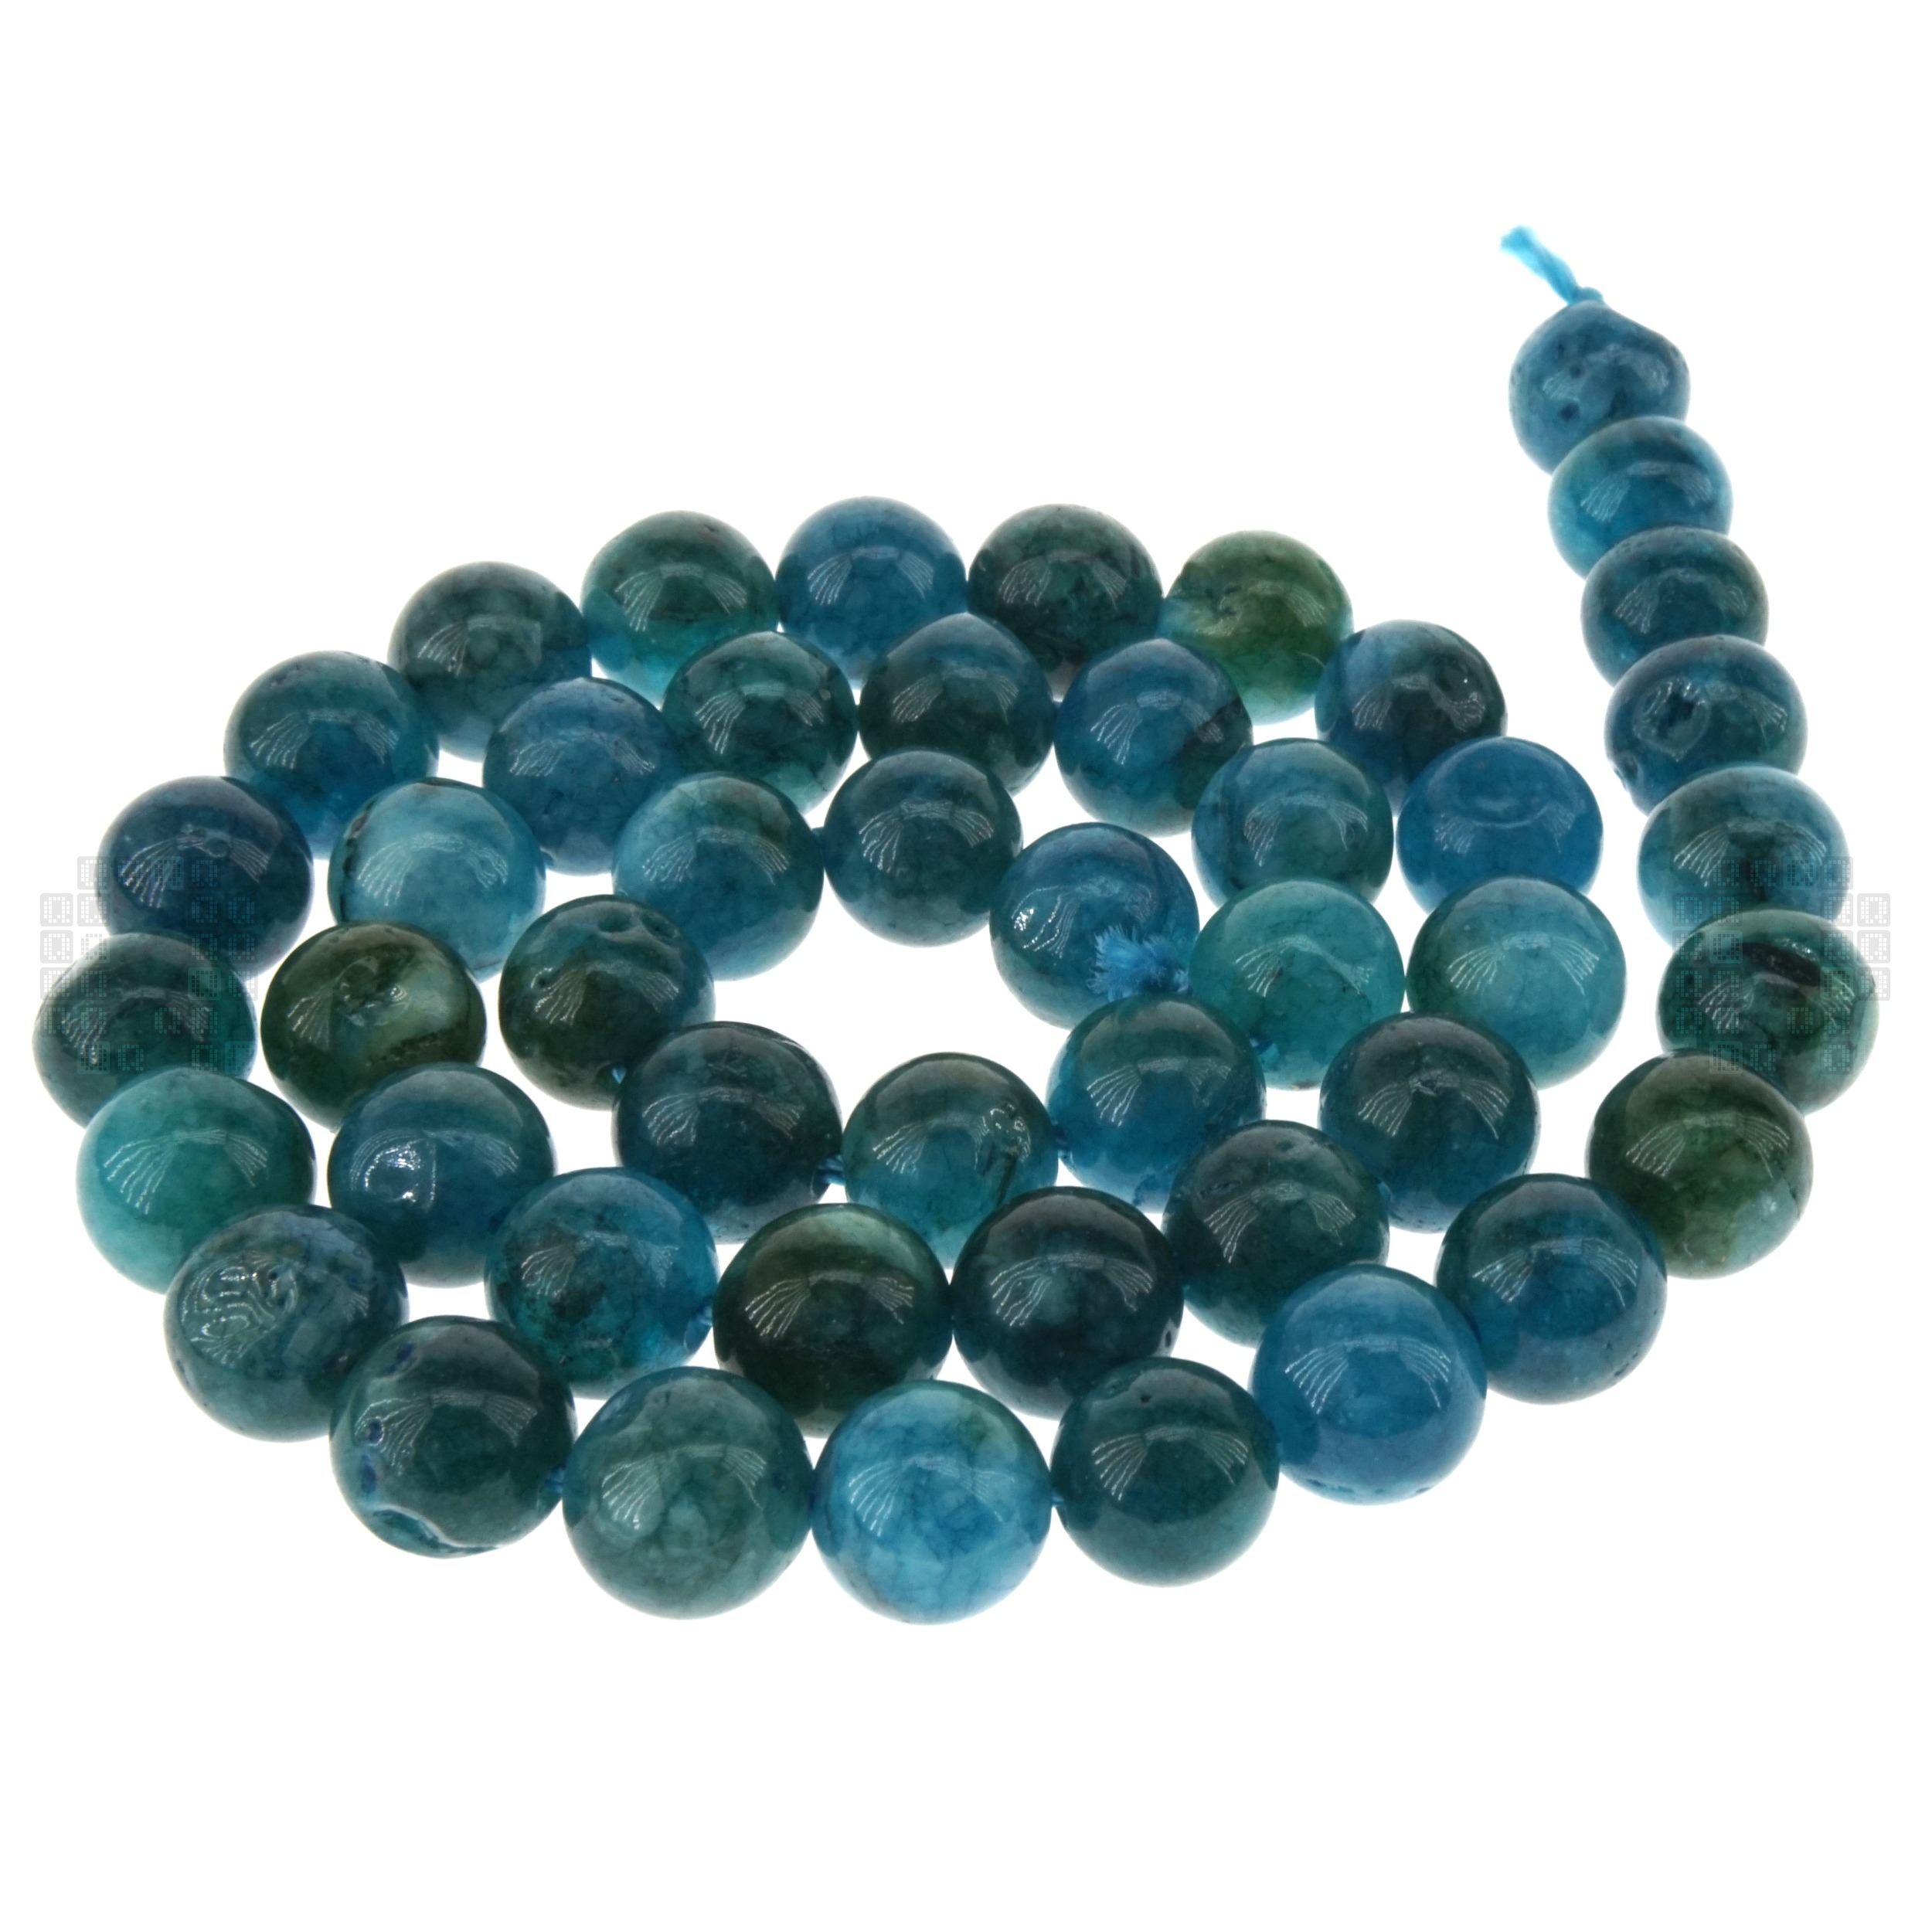 Blue Apatite Jade 8mm Round Glass Beads, 45 Pieces